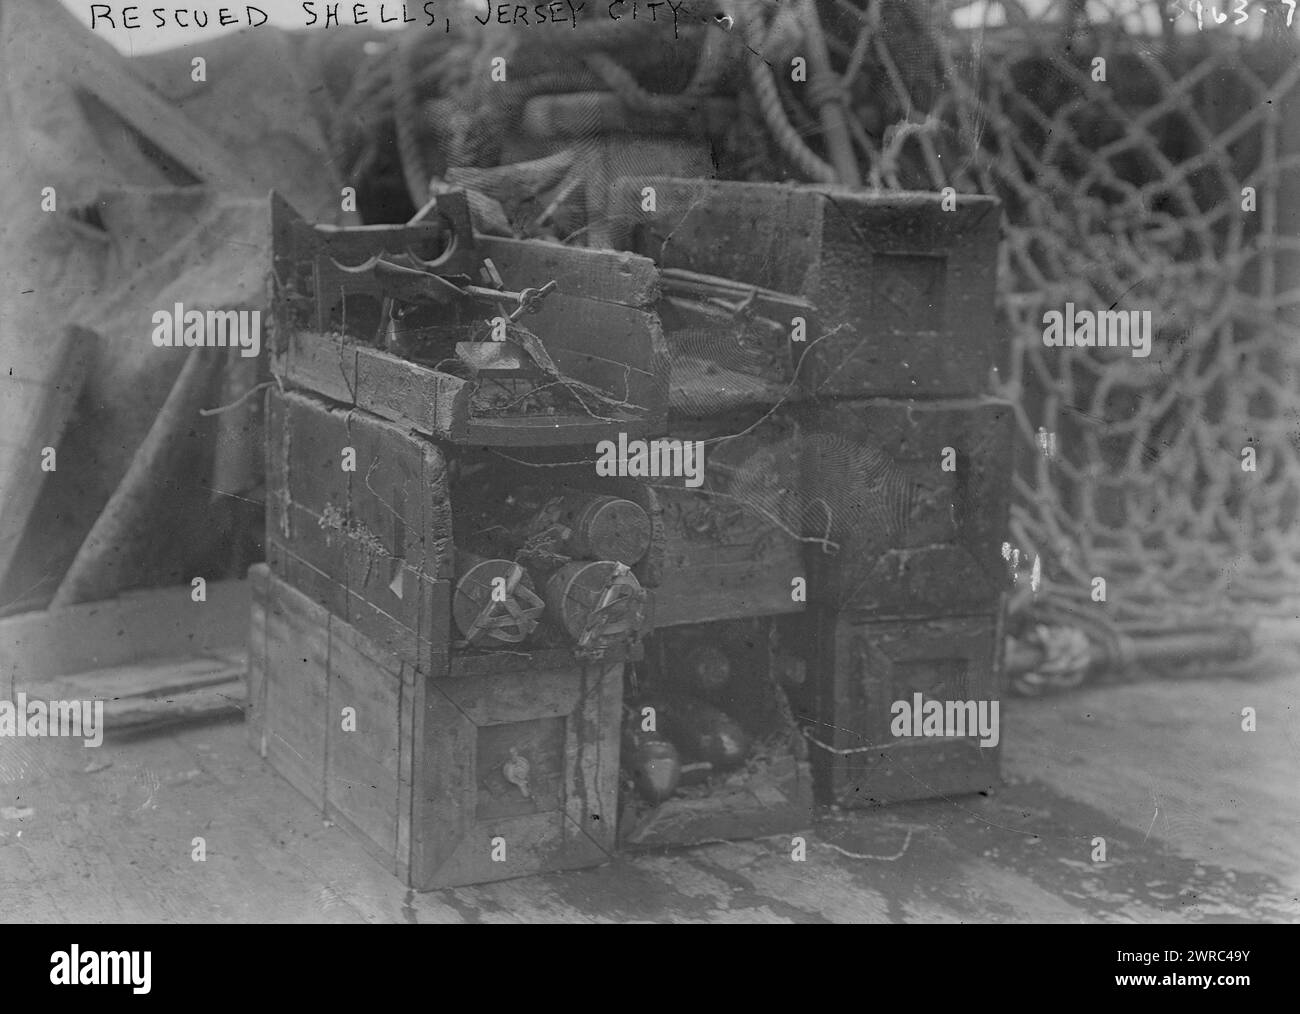 Retcued Shells, Jersey City, Foto zeigt die Folgen der Black Tom Munitions Explosion vom 30. Juli 1916 auf Black Tom Island im New York Harbor nahe Liberty Island., 1916, Glass negative, 1 negative: Glass Stockfoto